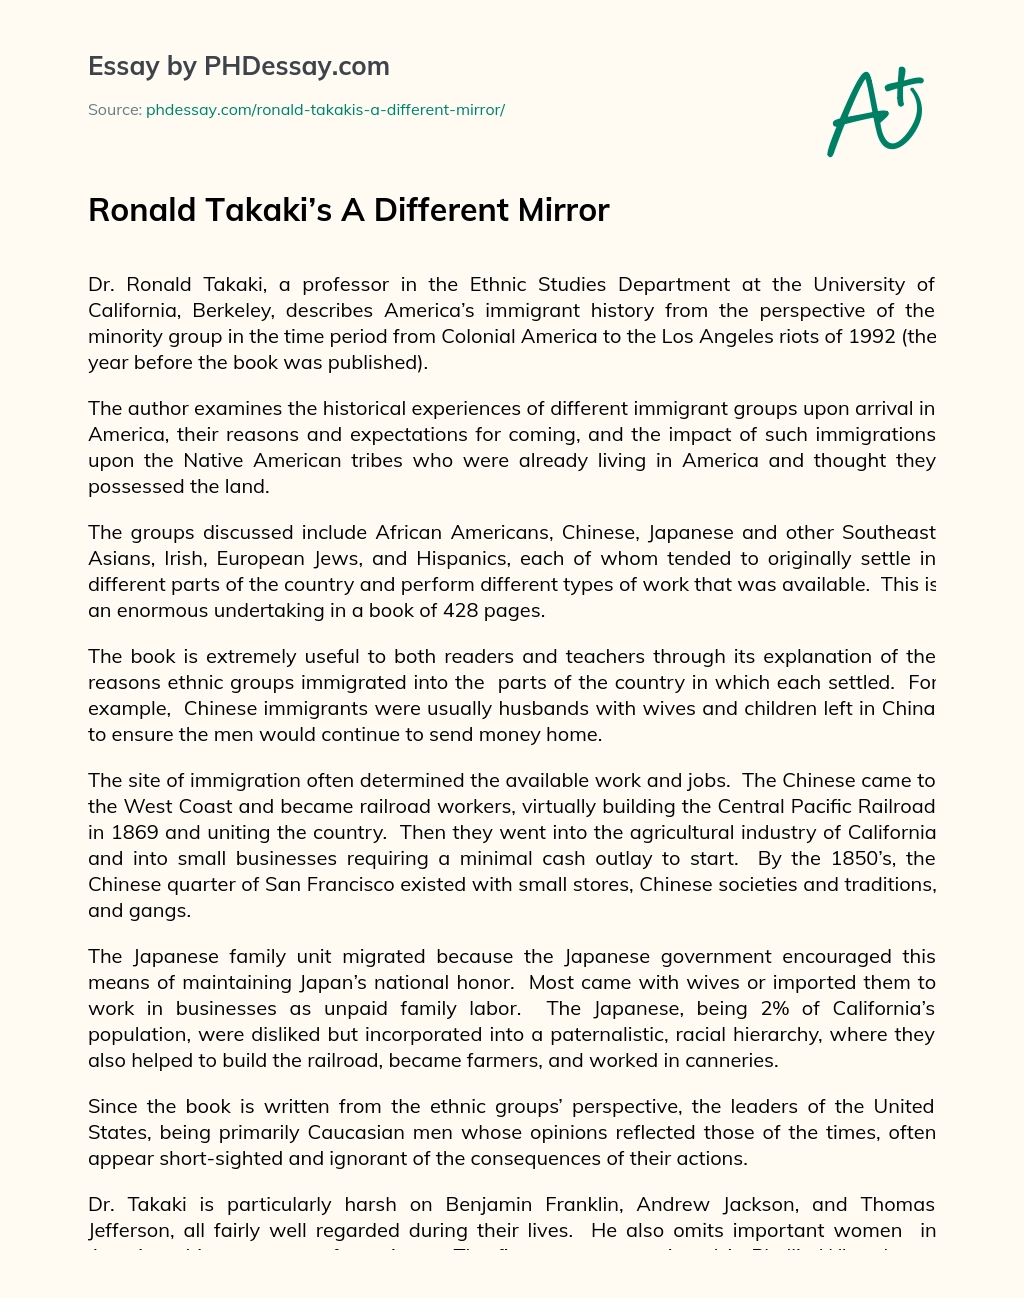 Ronald Takaki’s A Different Mirror essay